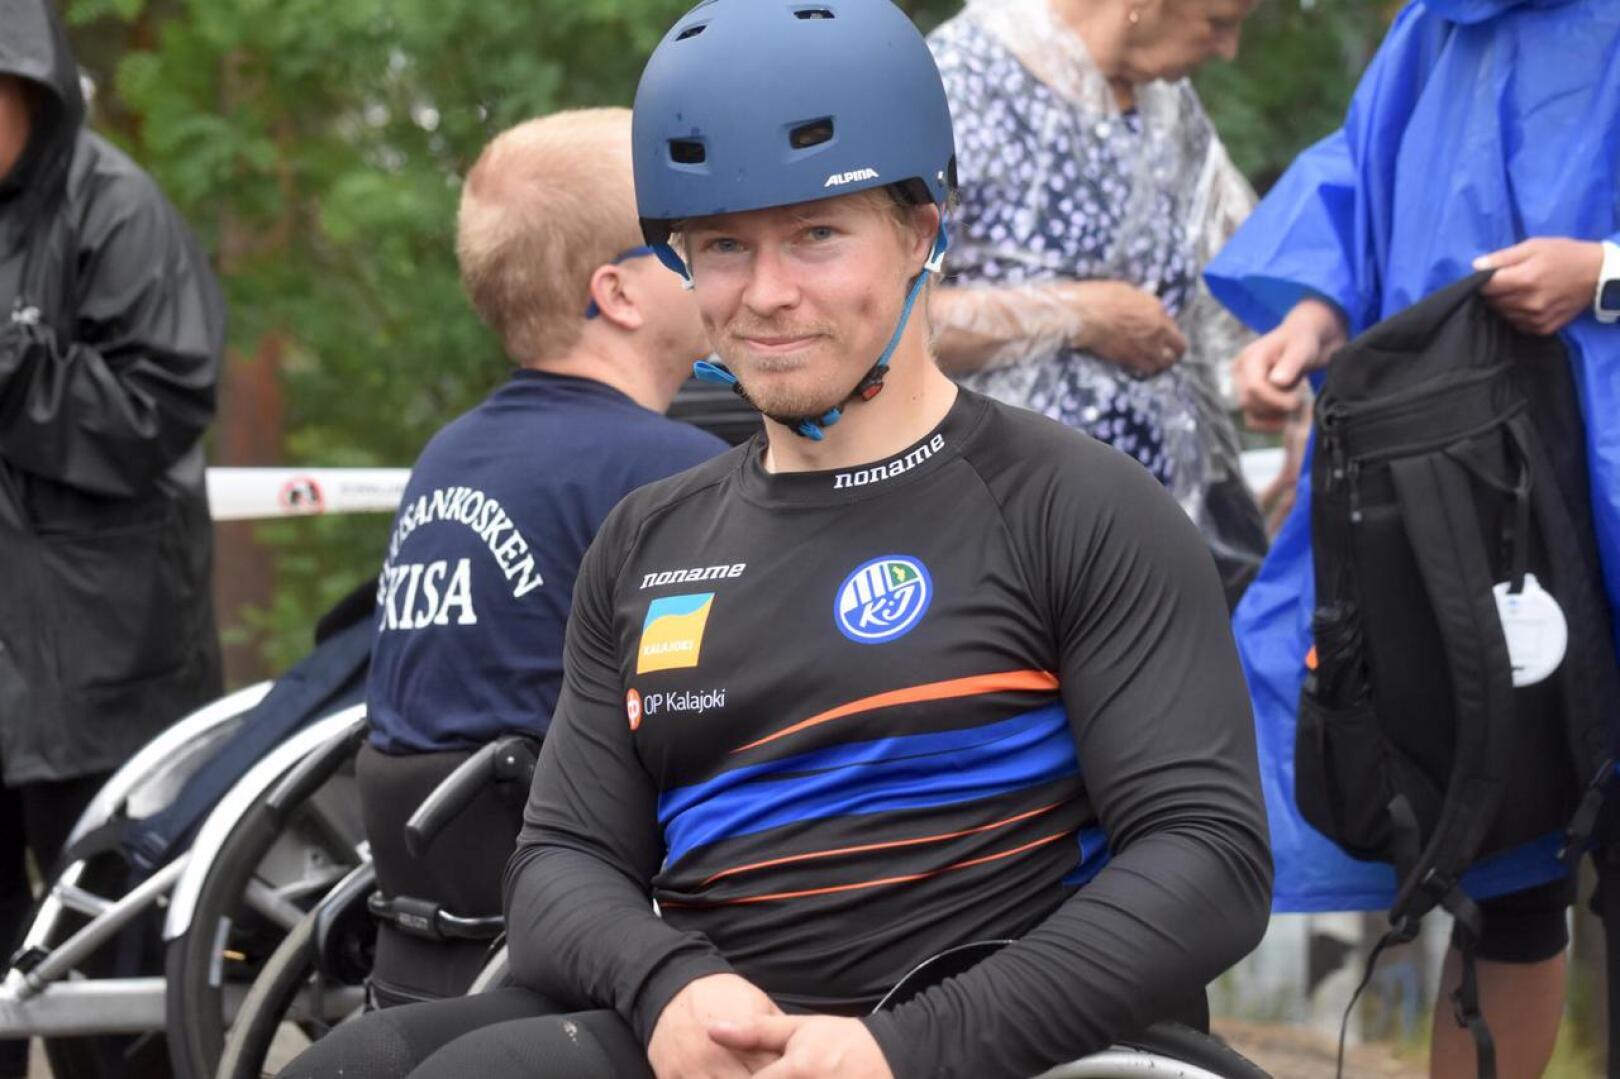 Kalajoen Junkkareiden Tuomo Himanka kelasi kaksi SM-mitalia lauantaina Kalevan kisoissa.